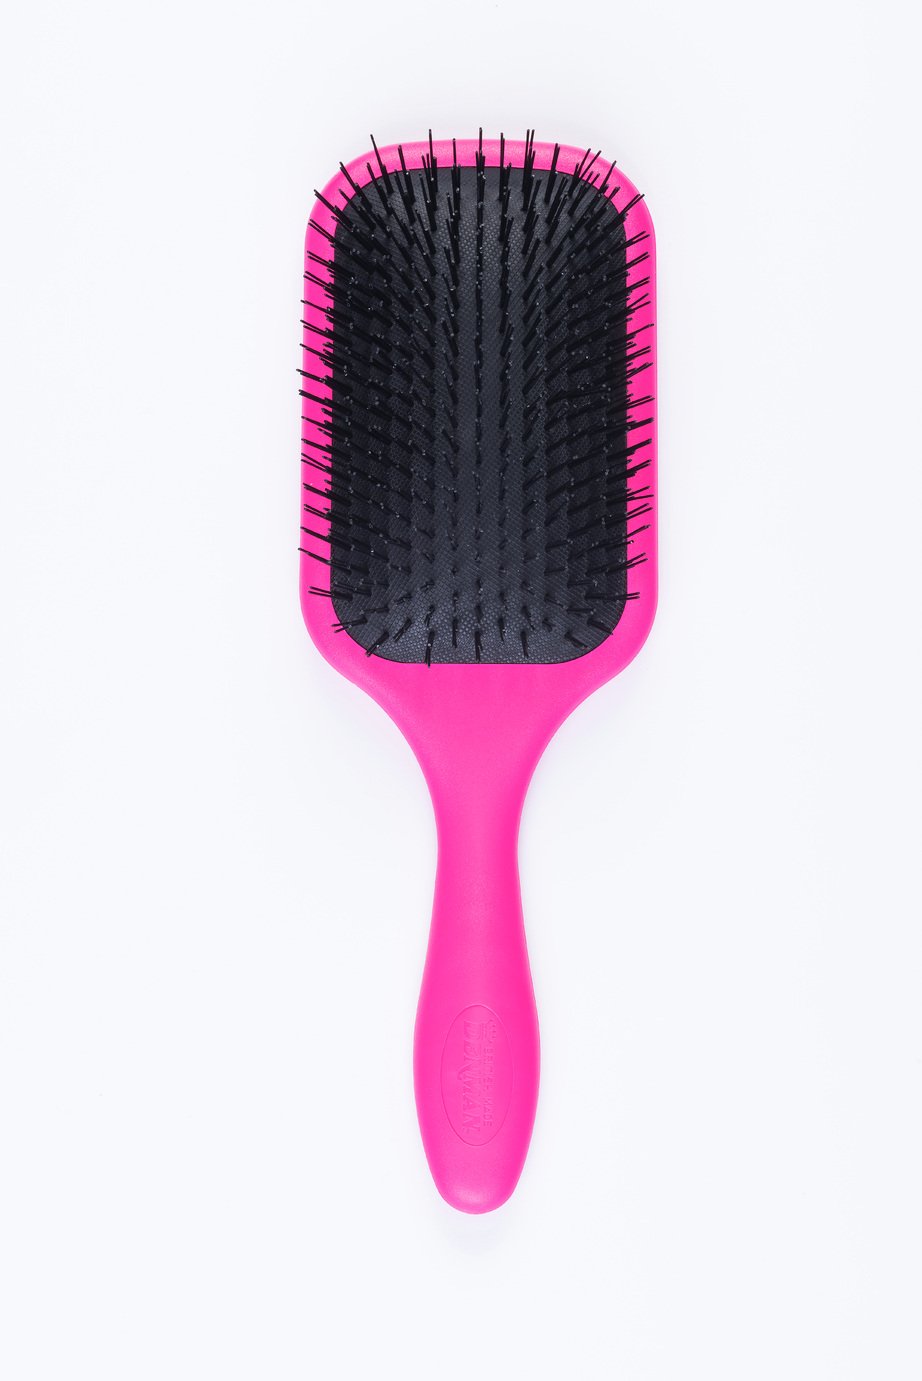 Denman D90L Tangle Tamer Ultra Hairbrush - Pink